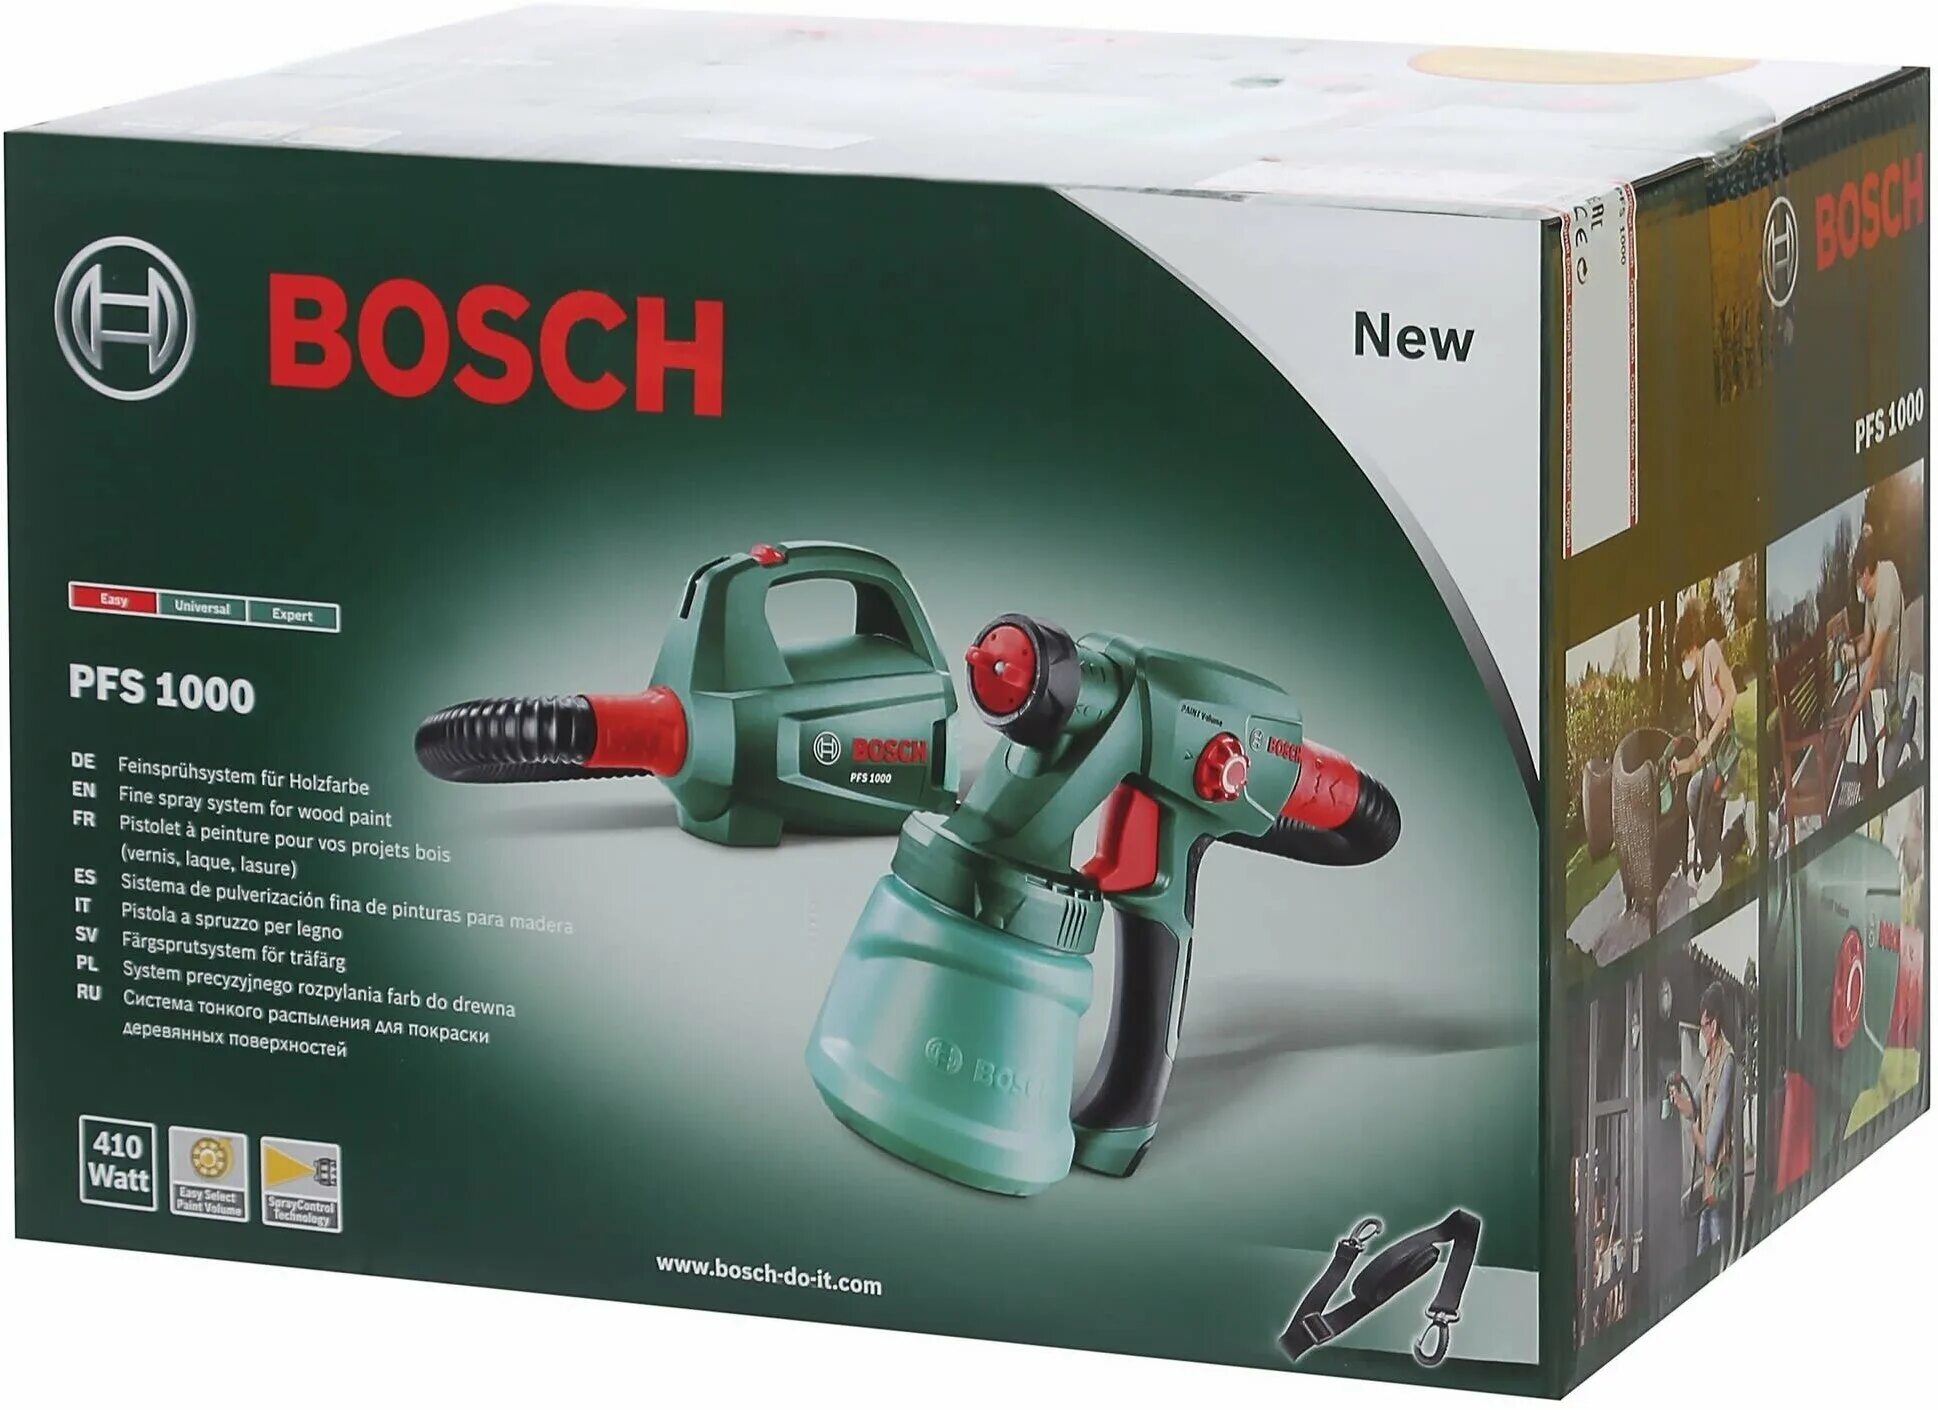 Купить краскопульт bosch. Краскопульт бош PFS 1000. Краскопульт Bosch PFS 1000, 420 Вт, 100 мл/мин. Краскопульт Bosch 12в. Краскопульта 420вт 100мл/мин PFS 1000.